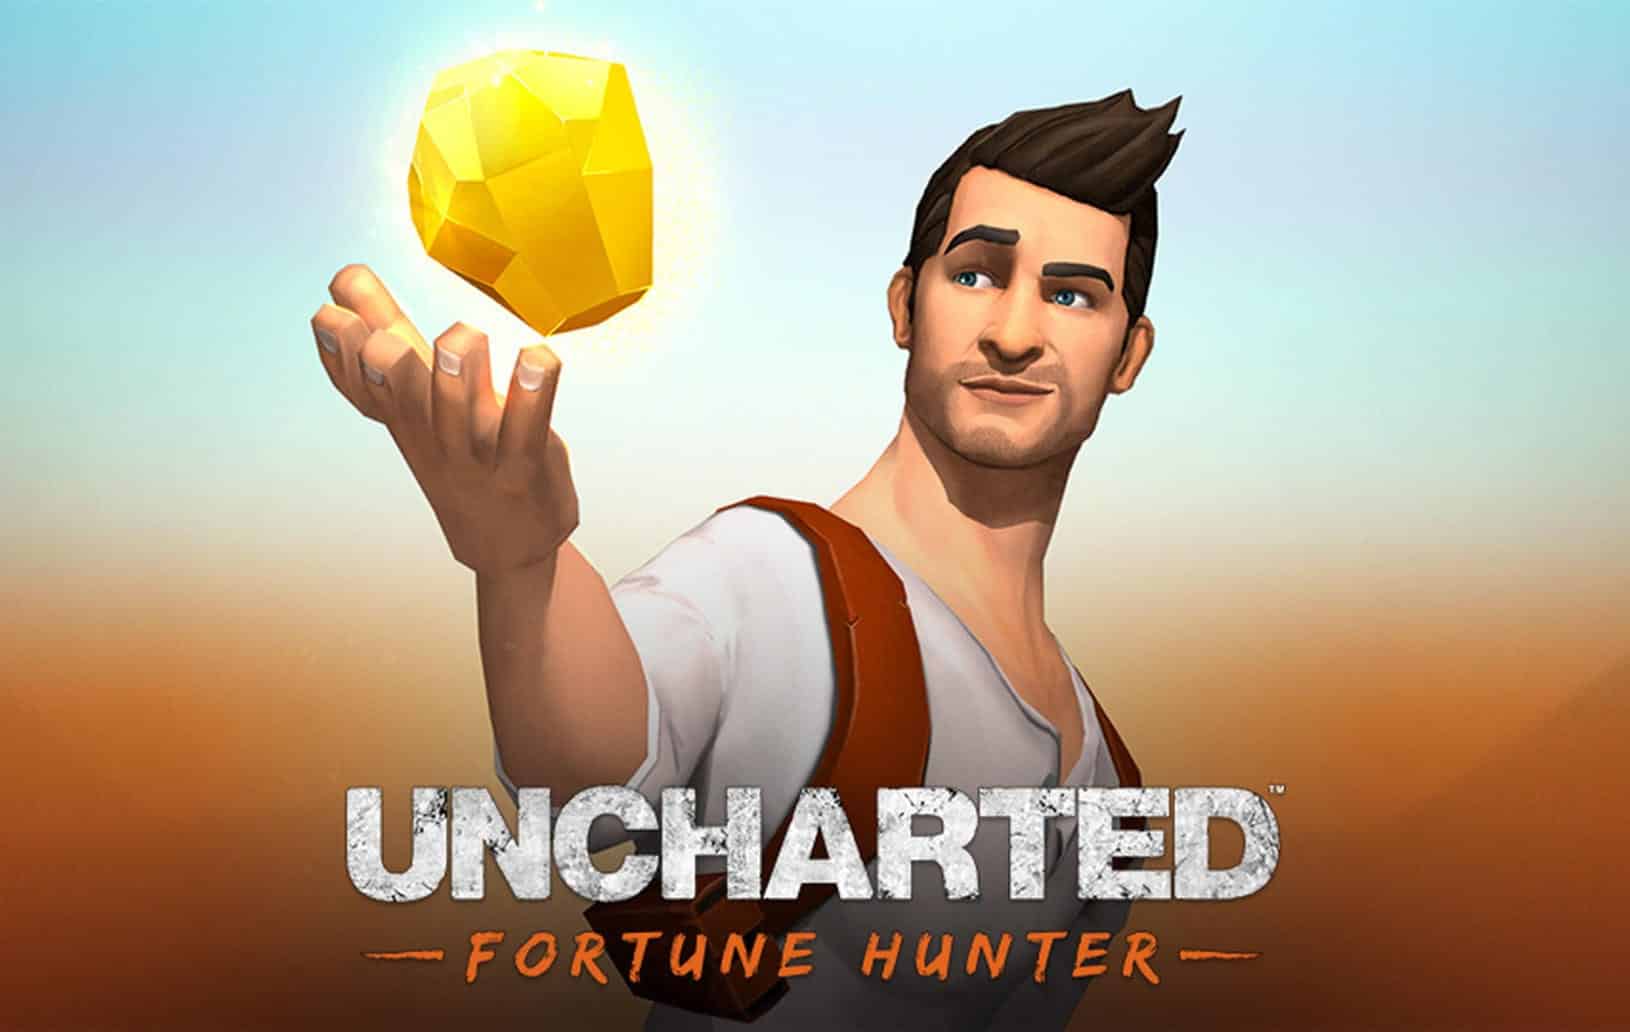 image du jeu Uncharted: Fortune Hunter, de Sony